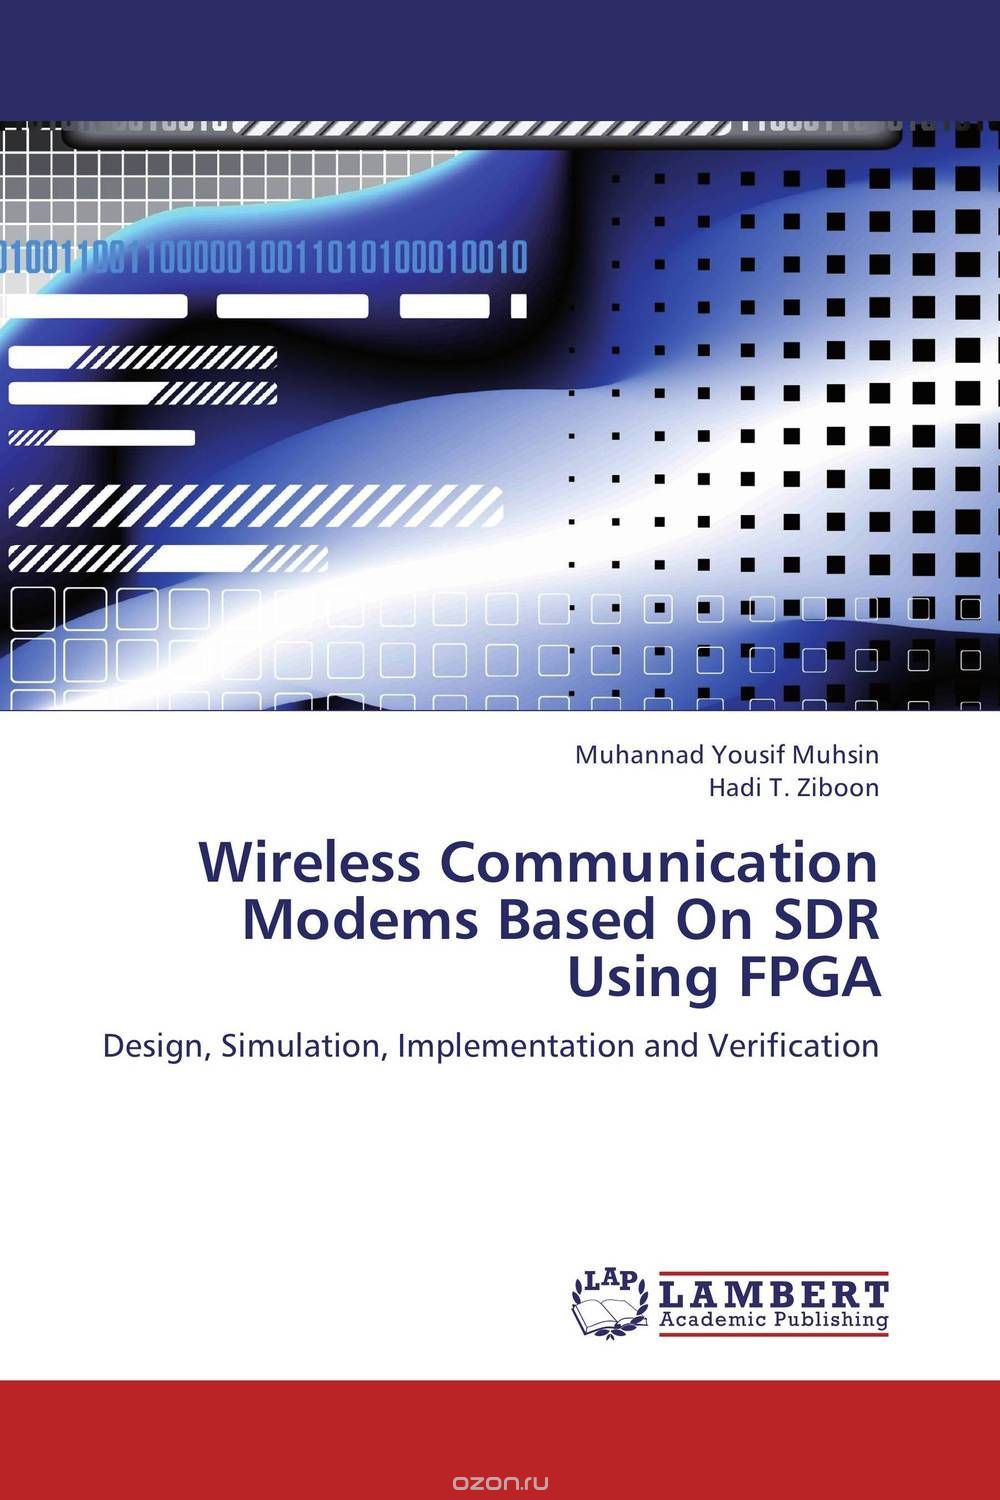 Скачать книгу "Wireless Communication Modems Based On SDR Using FPGA"